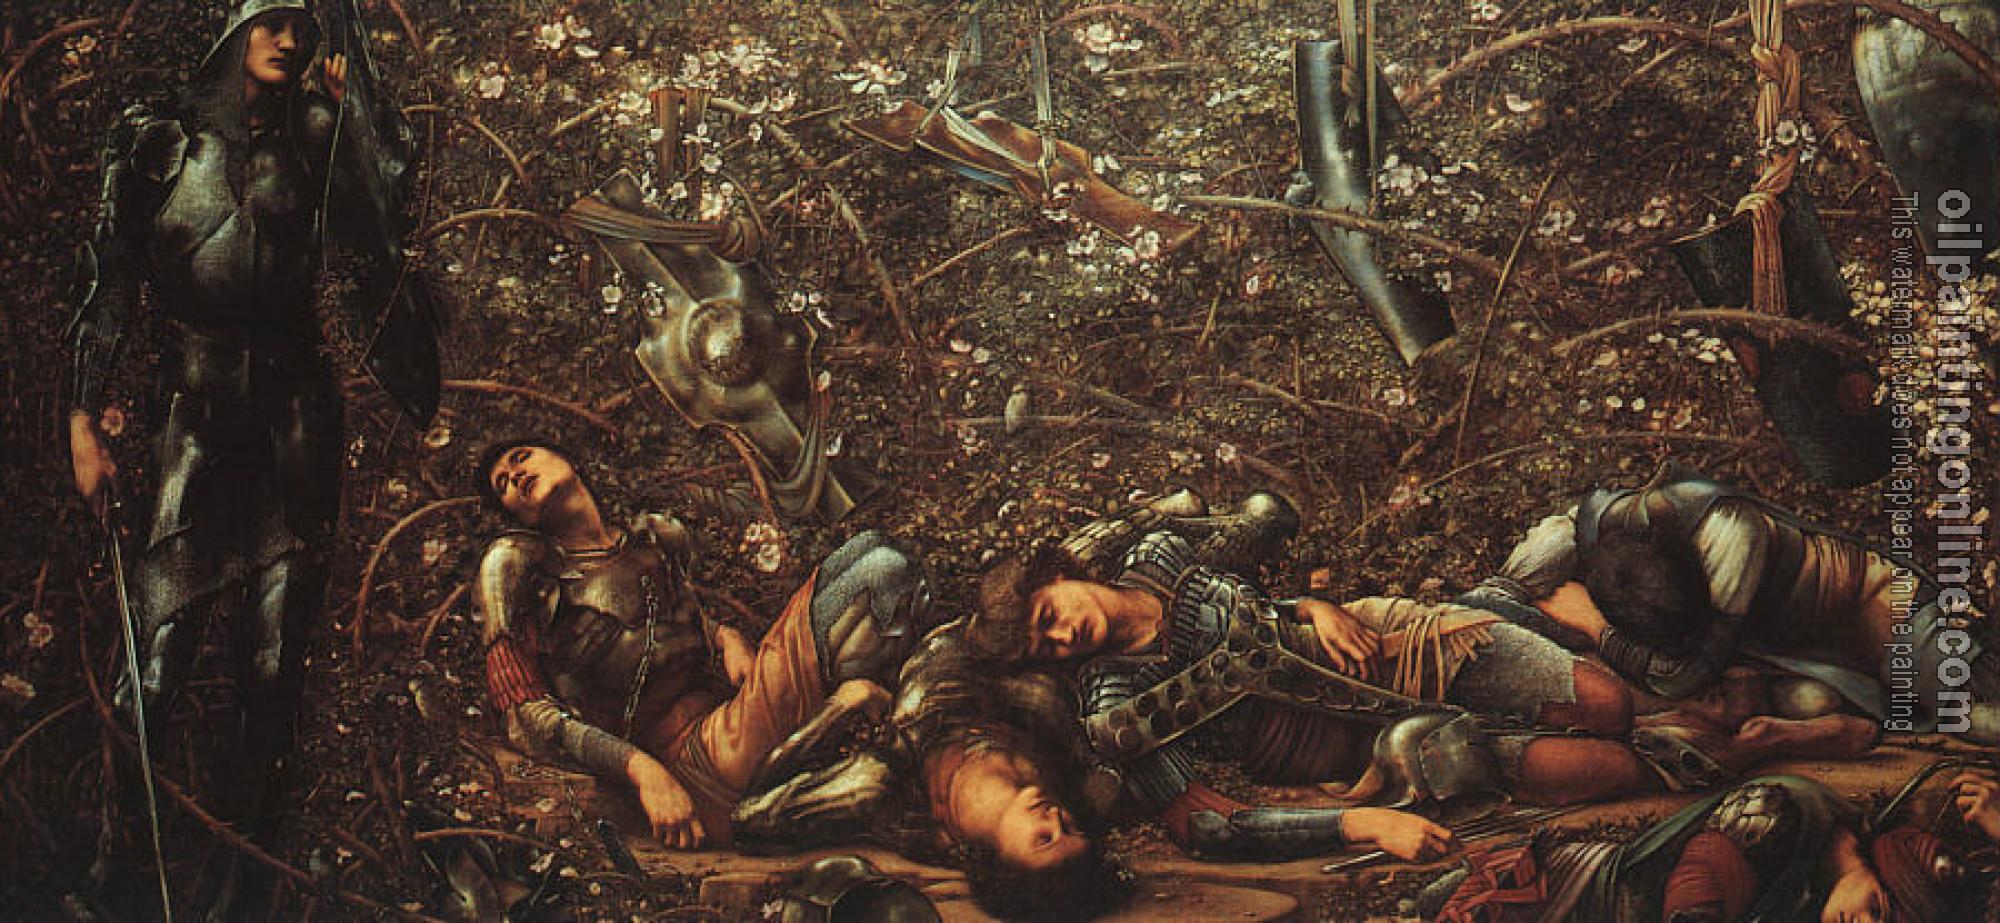 Burne-Jones, Sir Edward Coley - The Briar Rose- The Prince Enters the Briar Wood